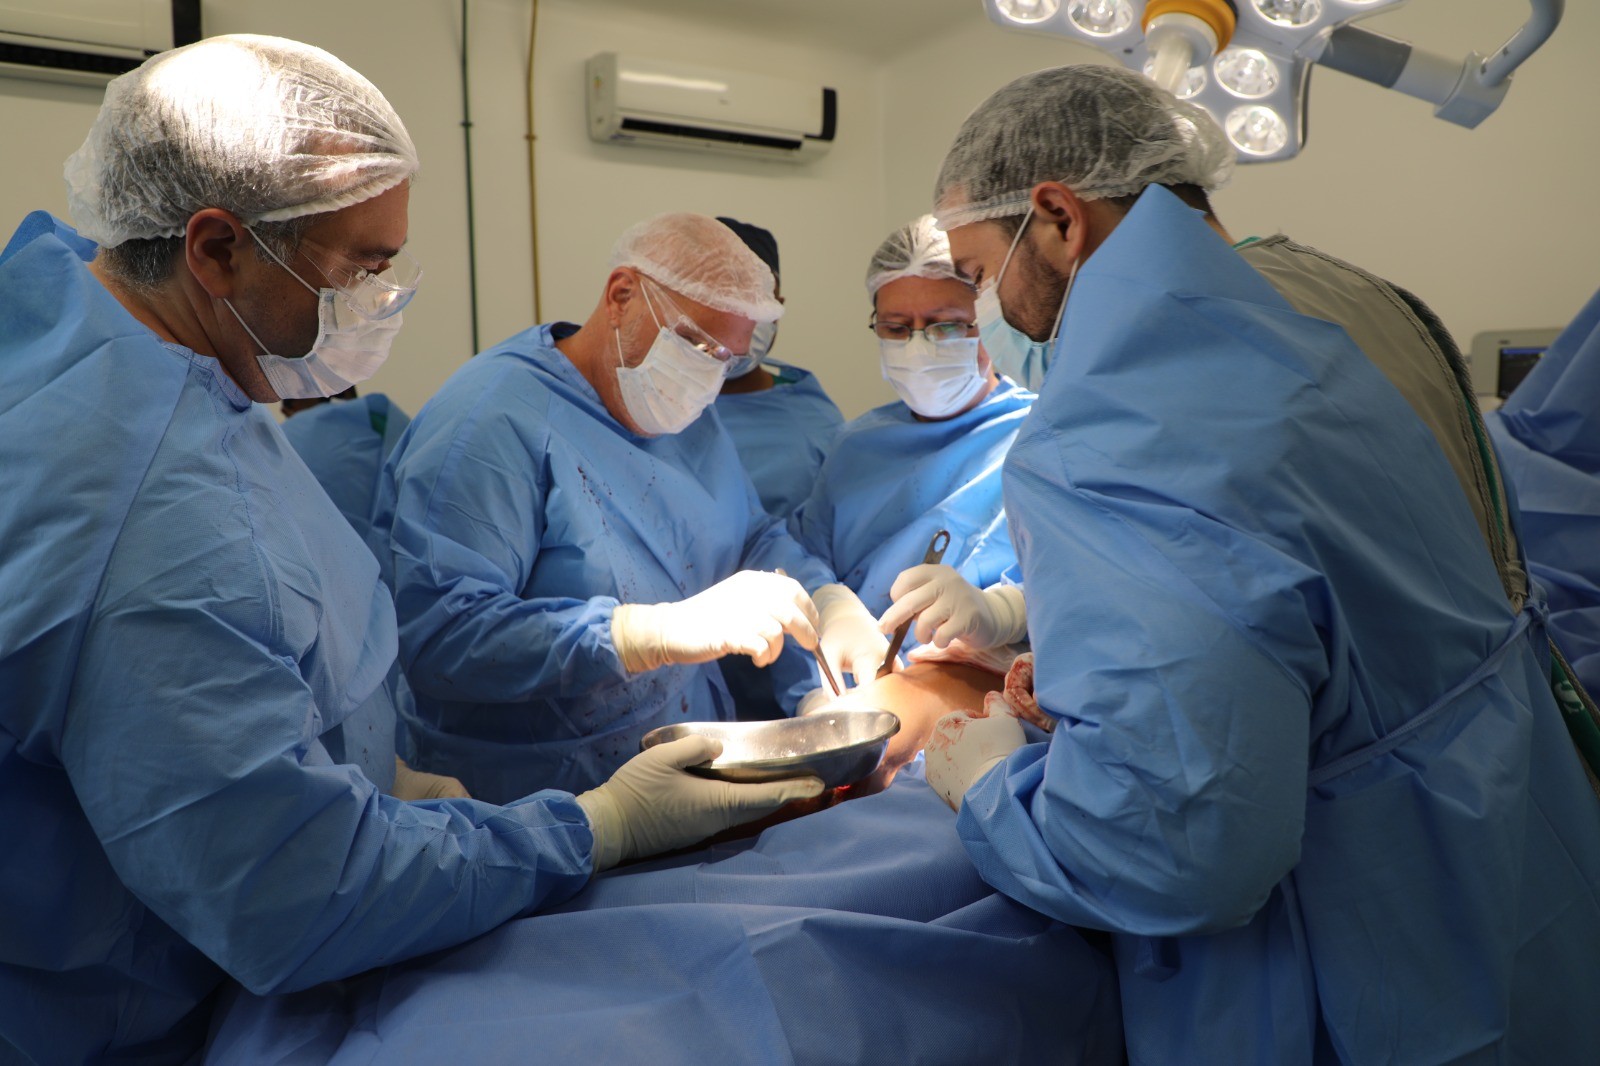 rondonia-faz-primeiro-transplante-osseo-do-norte;-entenda-como-funciona-cirurgia-que-usa-‘parte’-de-cadaver